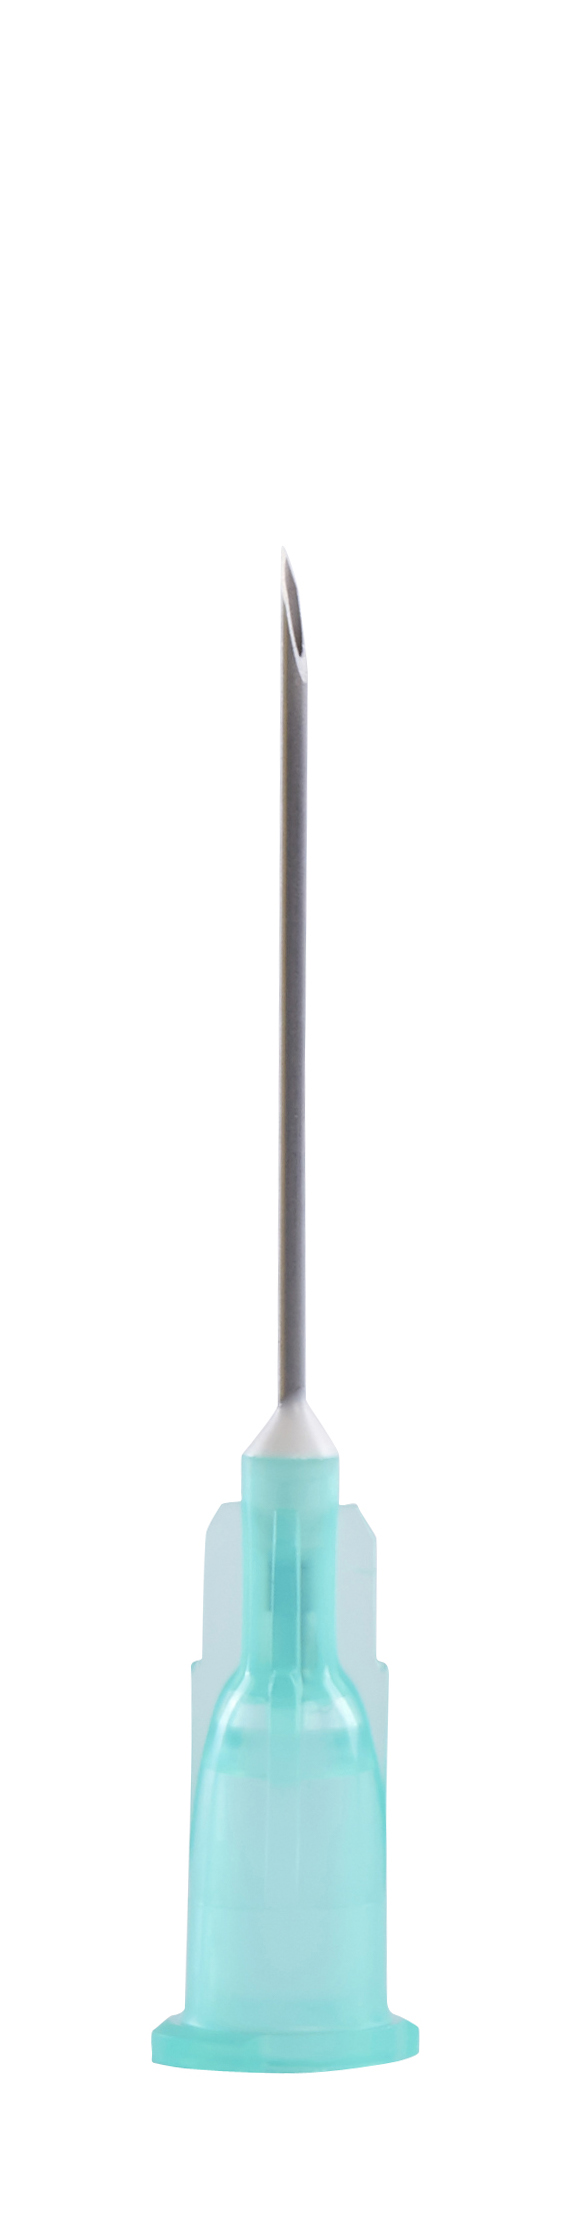 KRUUSE Disposable Needle, 0.8 x 25 mm, 21G x 1, green, 100/pk